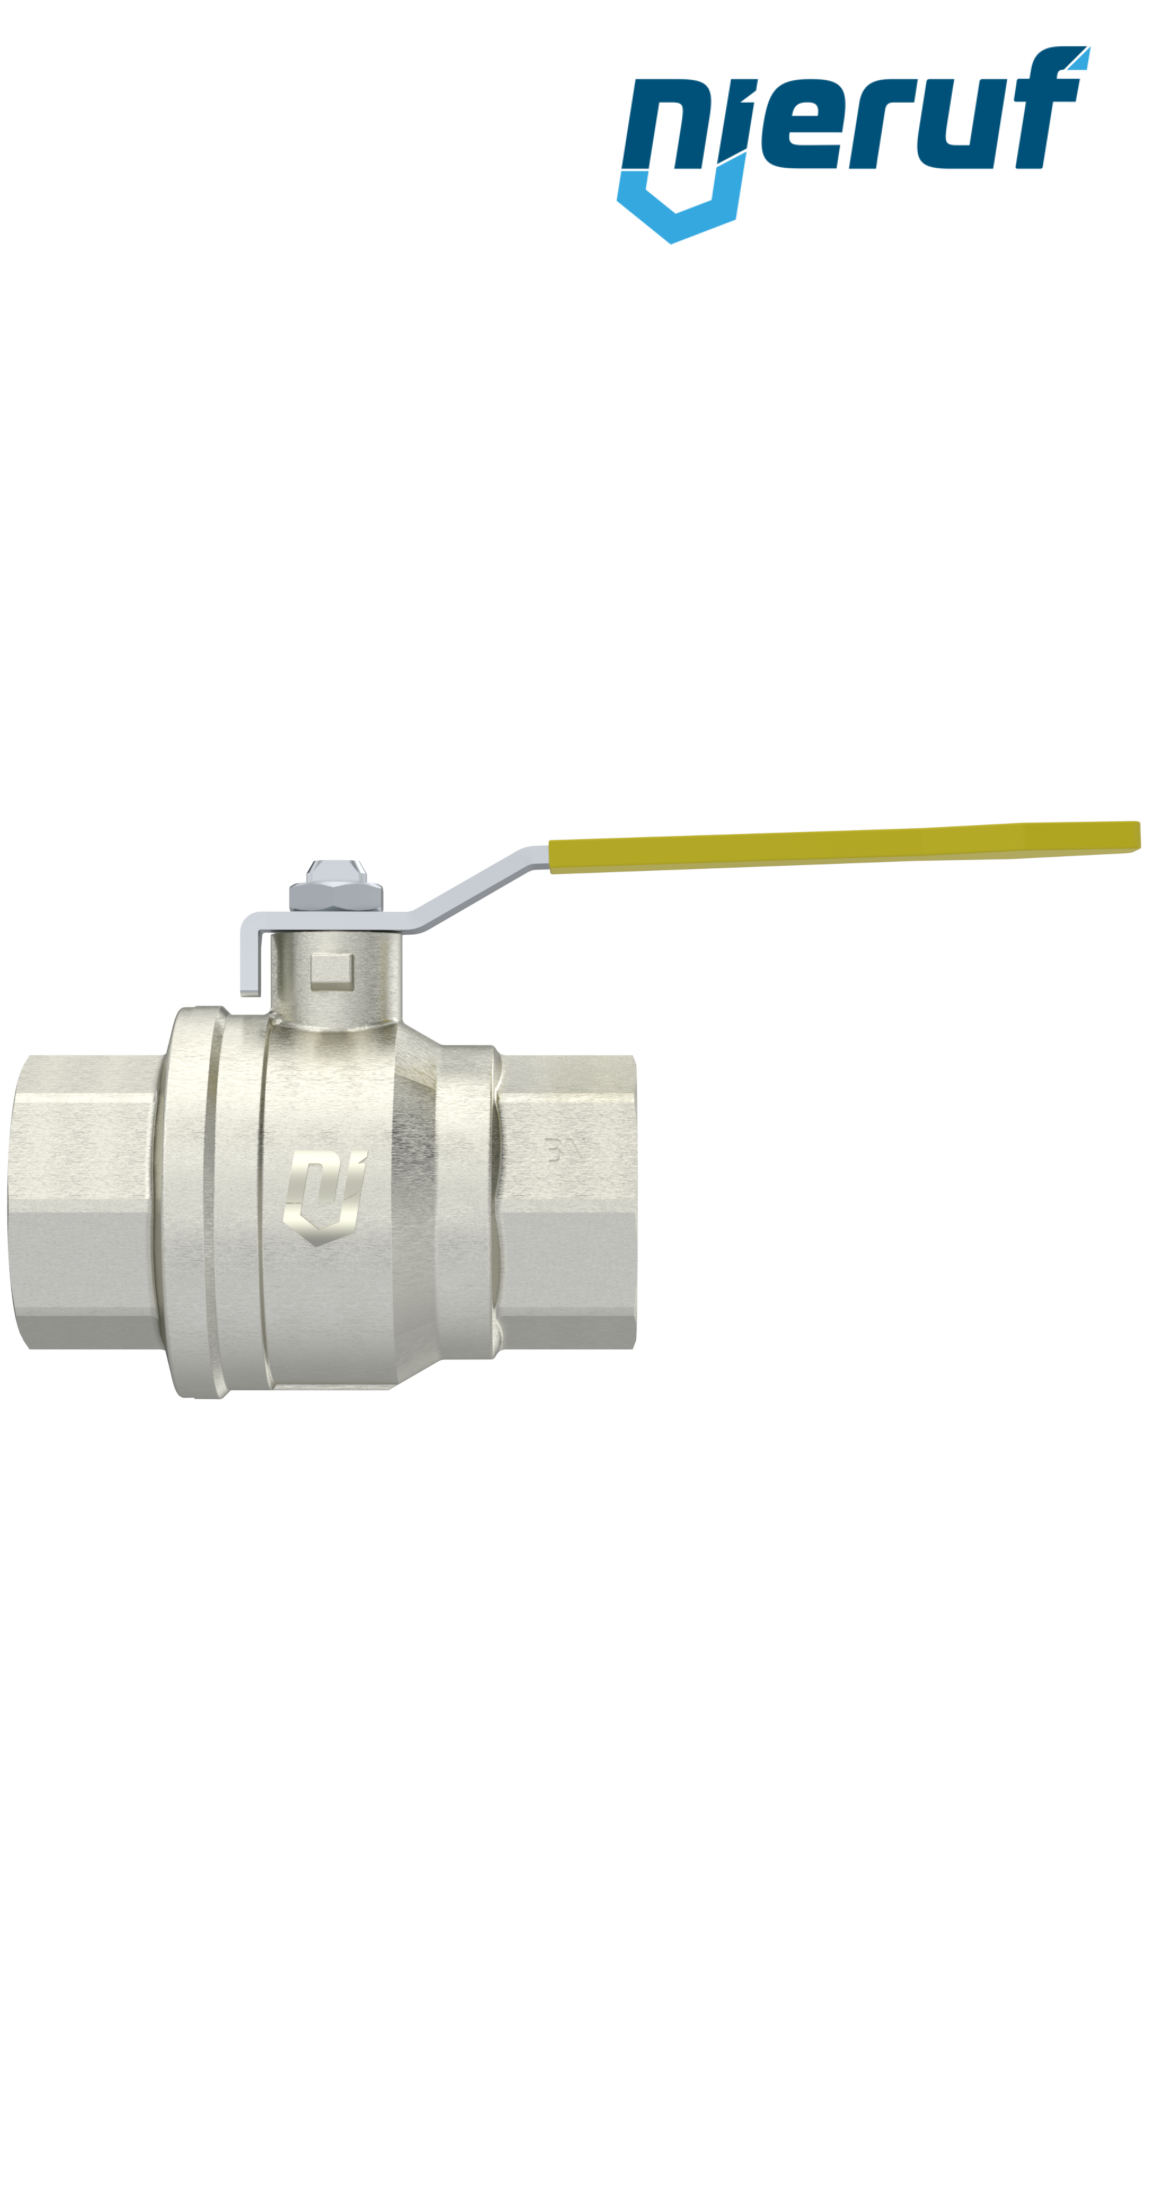 brass ball valve for gas DN15 - 1/2" inch GK14 female thread